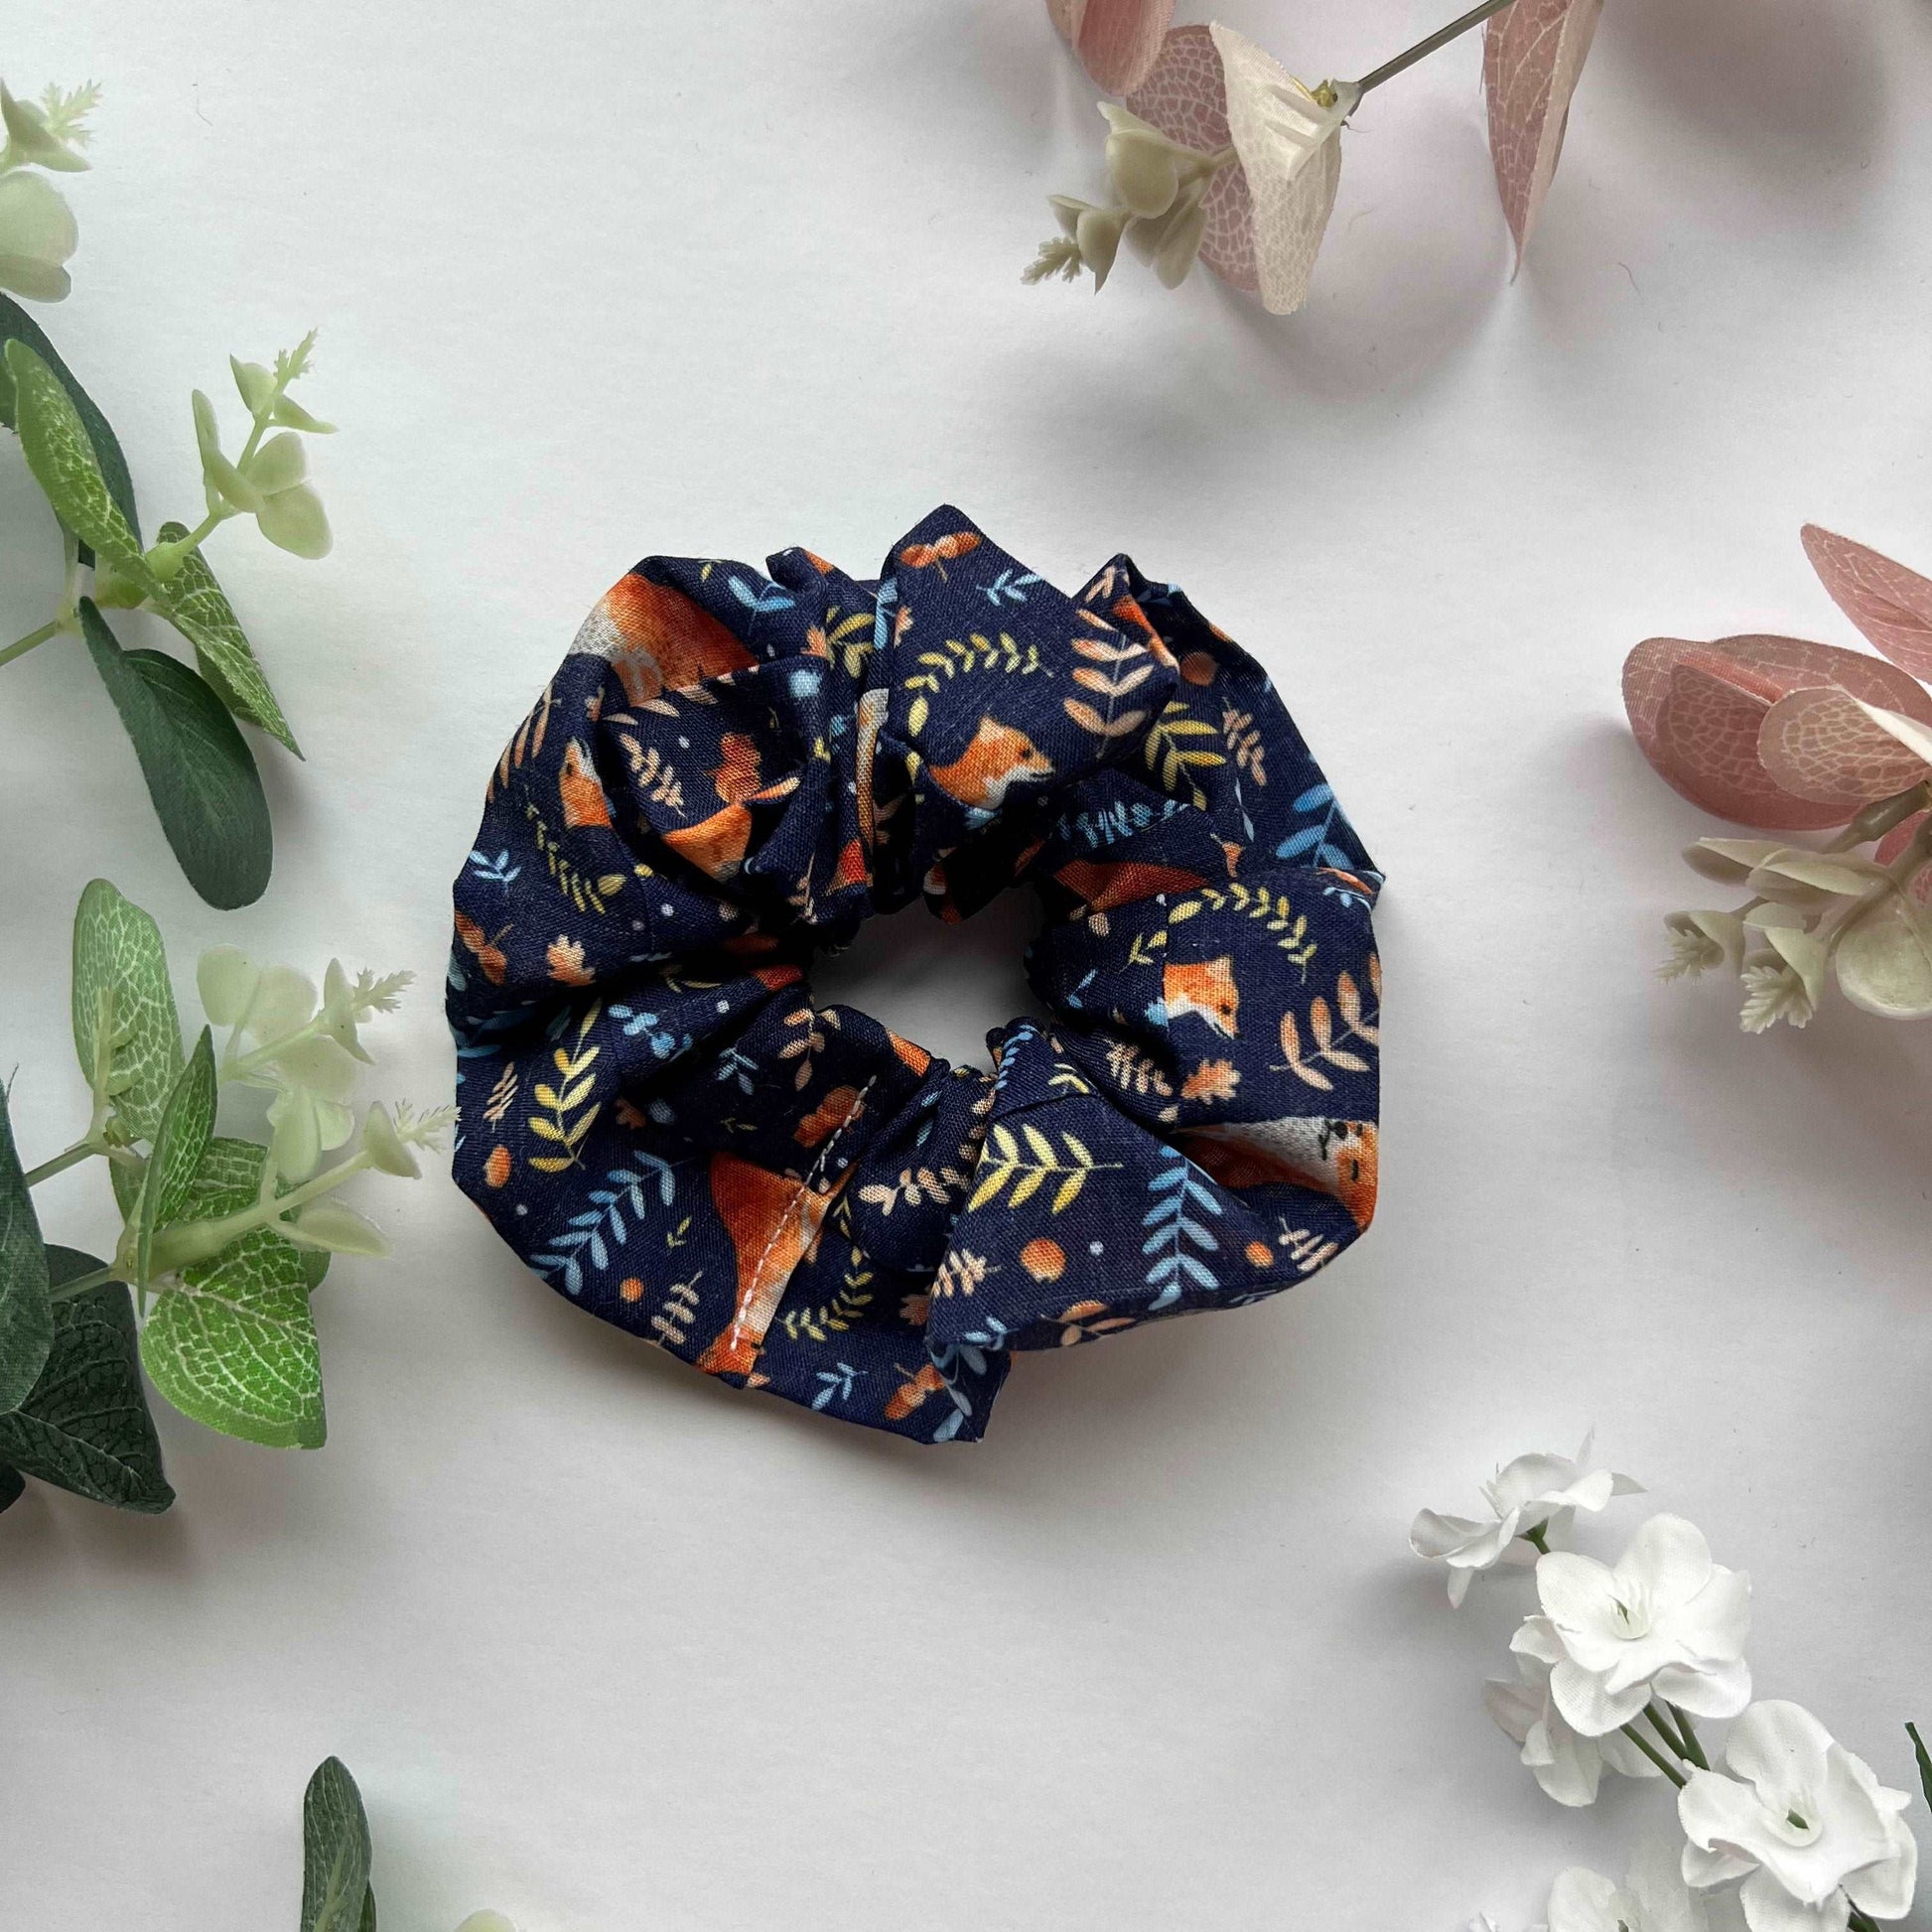 Unusual fox gifts – charming cotton scrunchie.